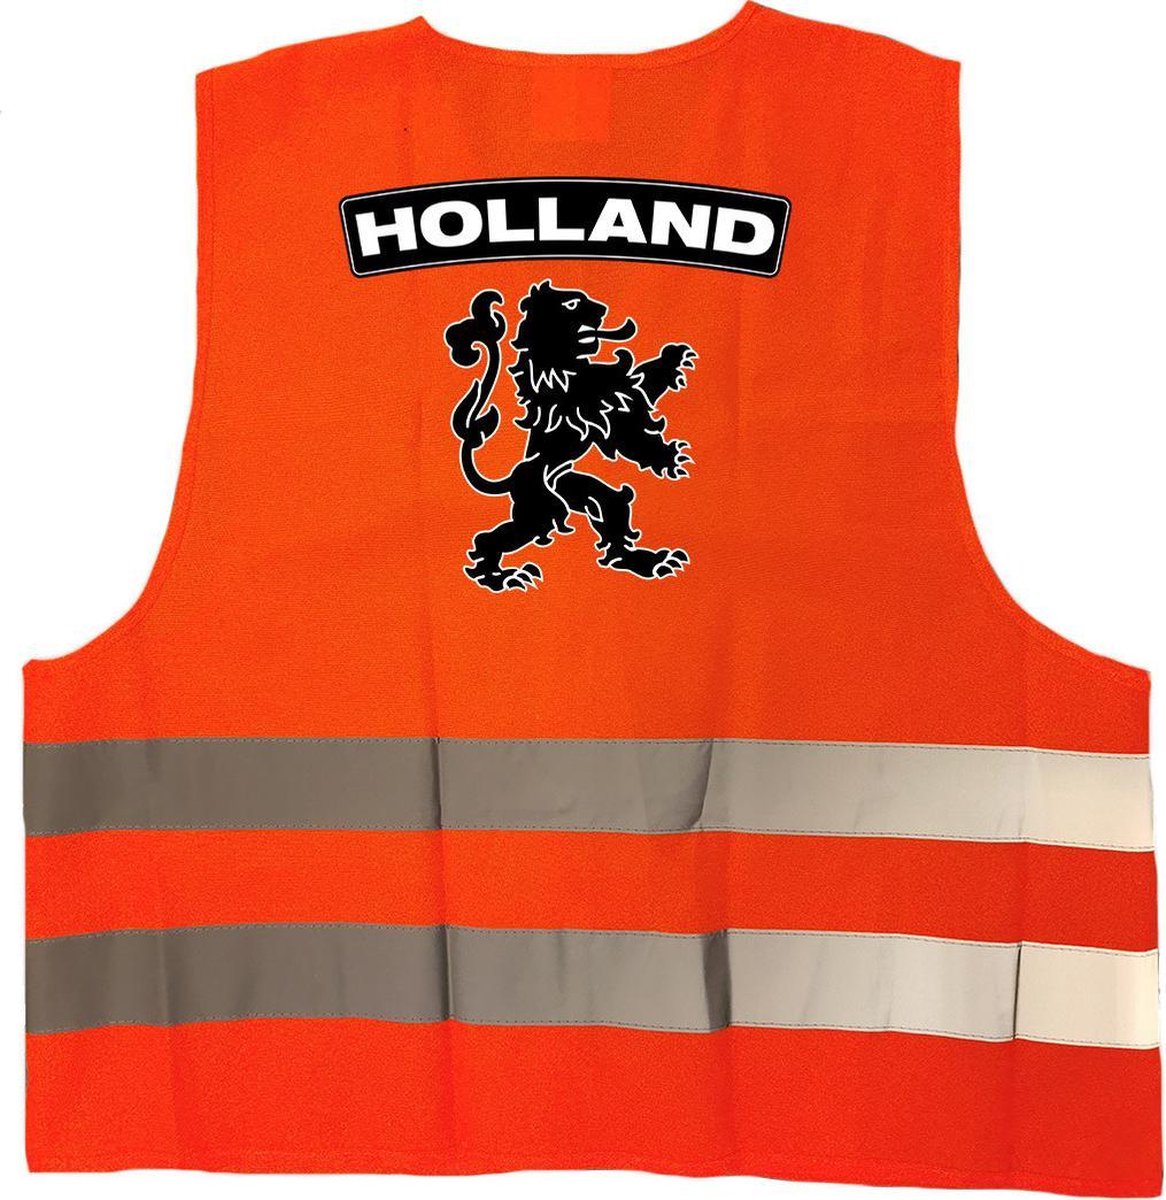 Holland hesje reflecterend oranje - Hollandse leeuw - EK / WK / Holland supporter kleding - veiligheidshesje